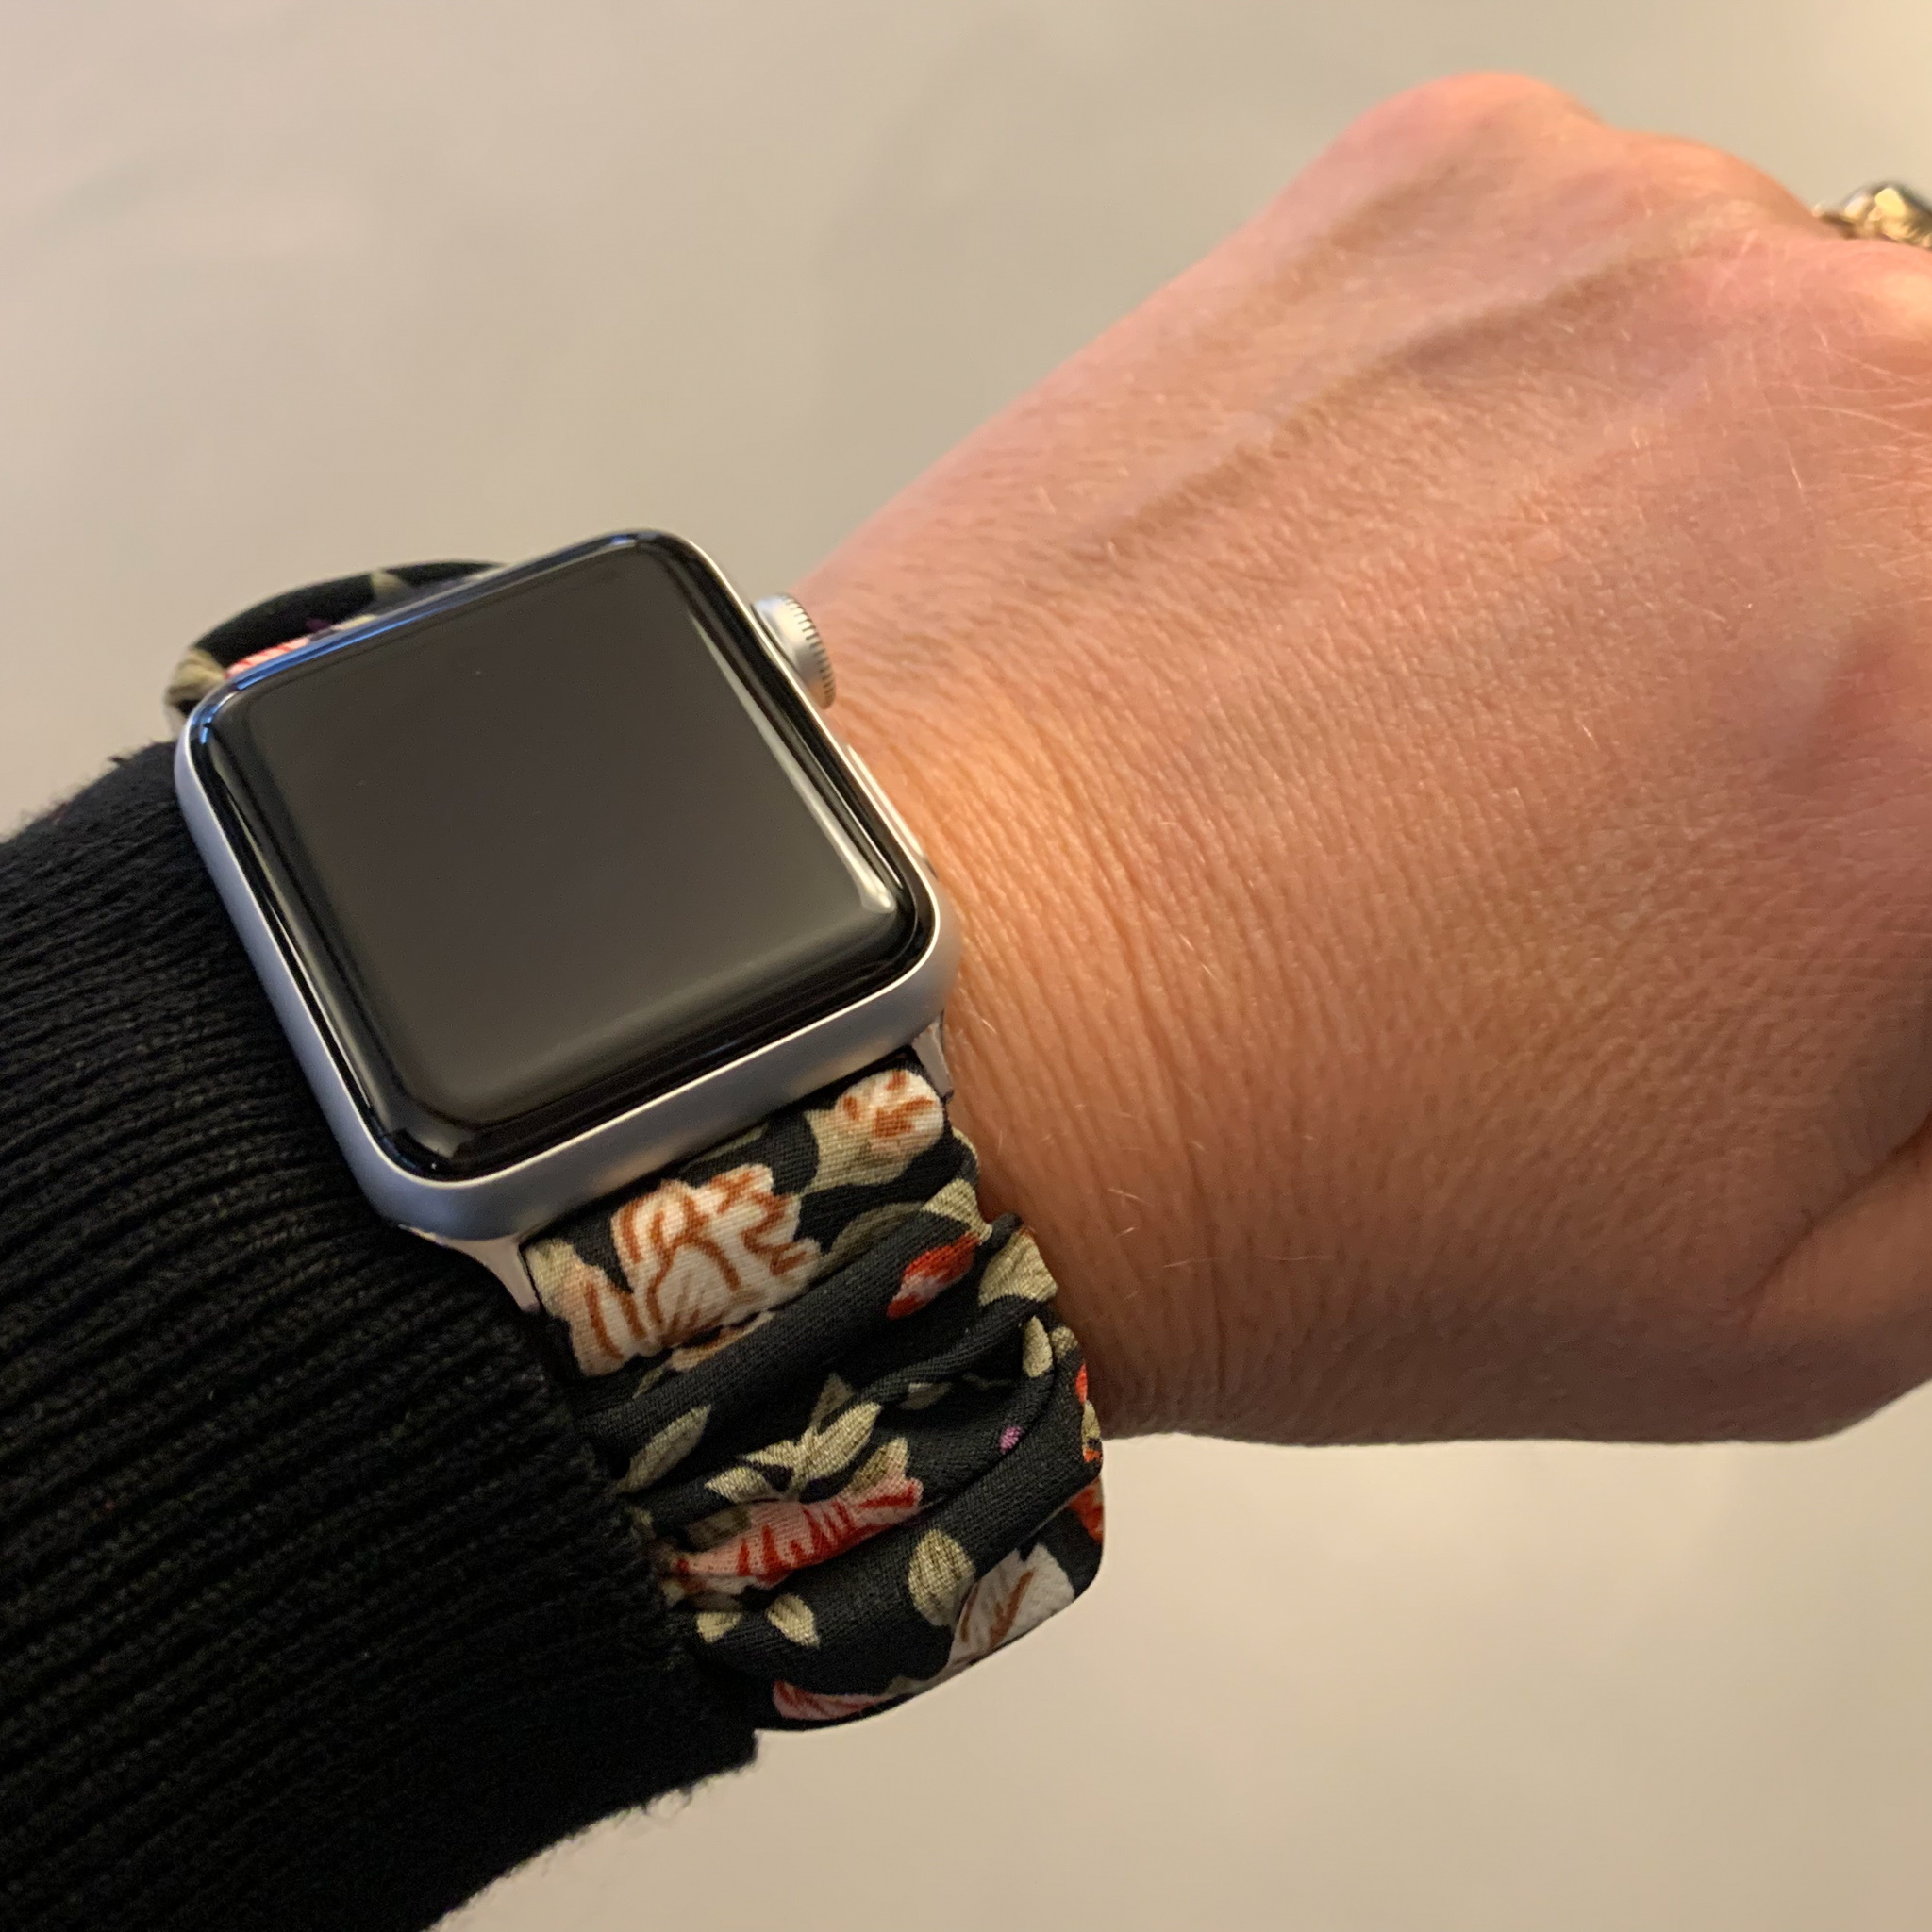 Apple Watch nylon scrunchie band - bloemen zwart